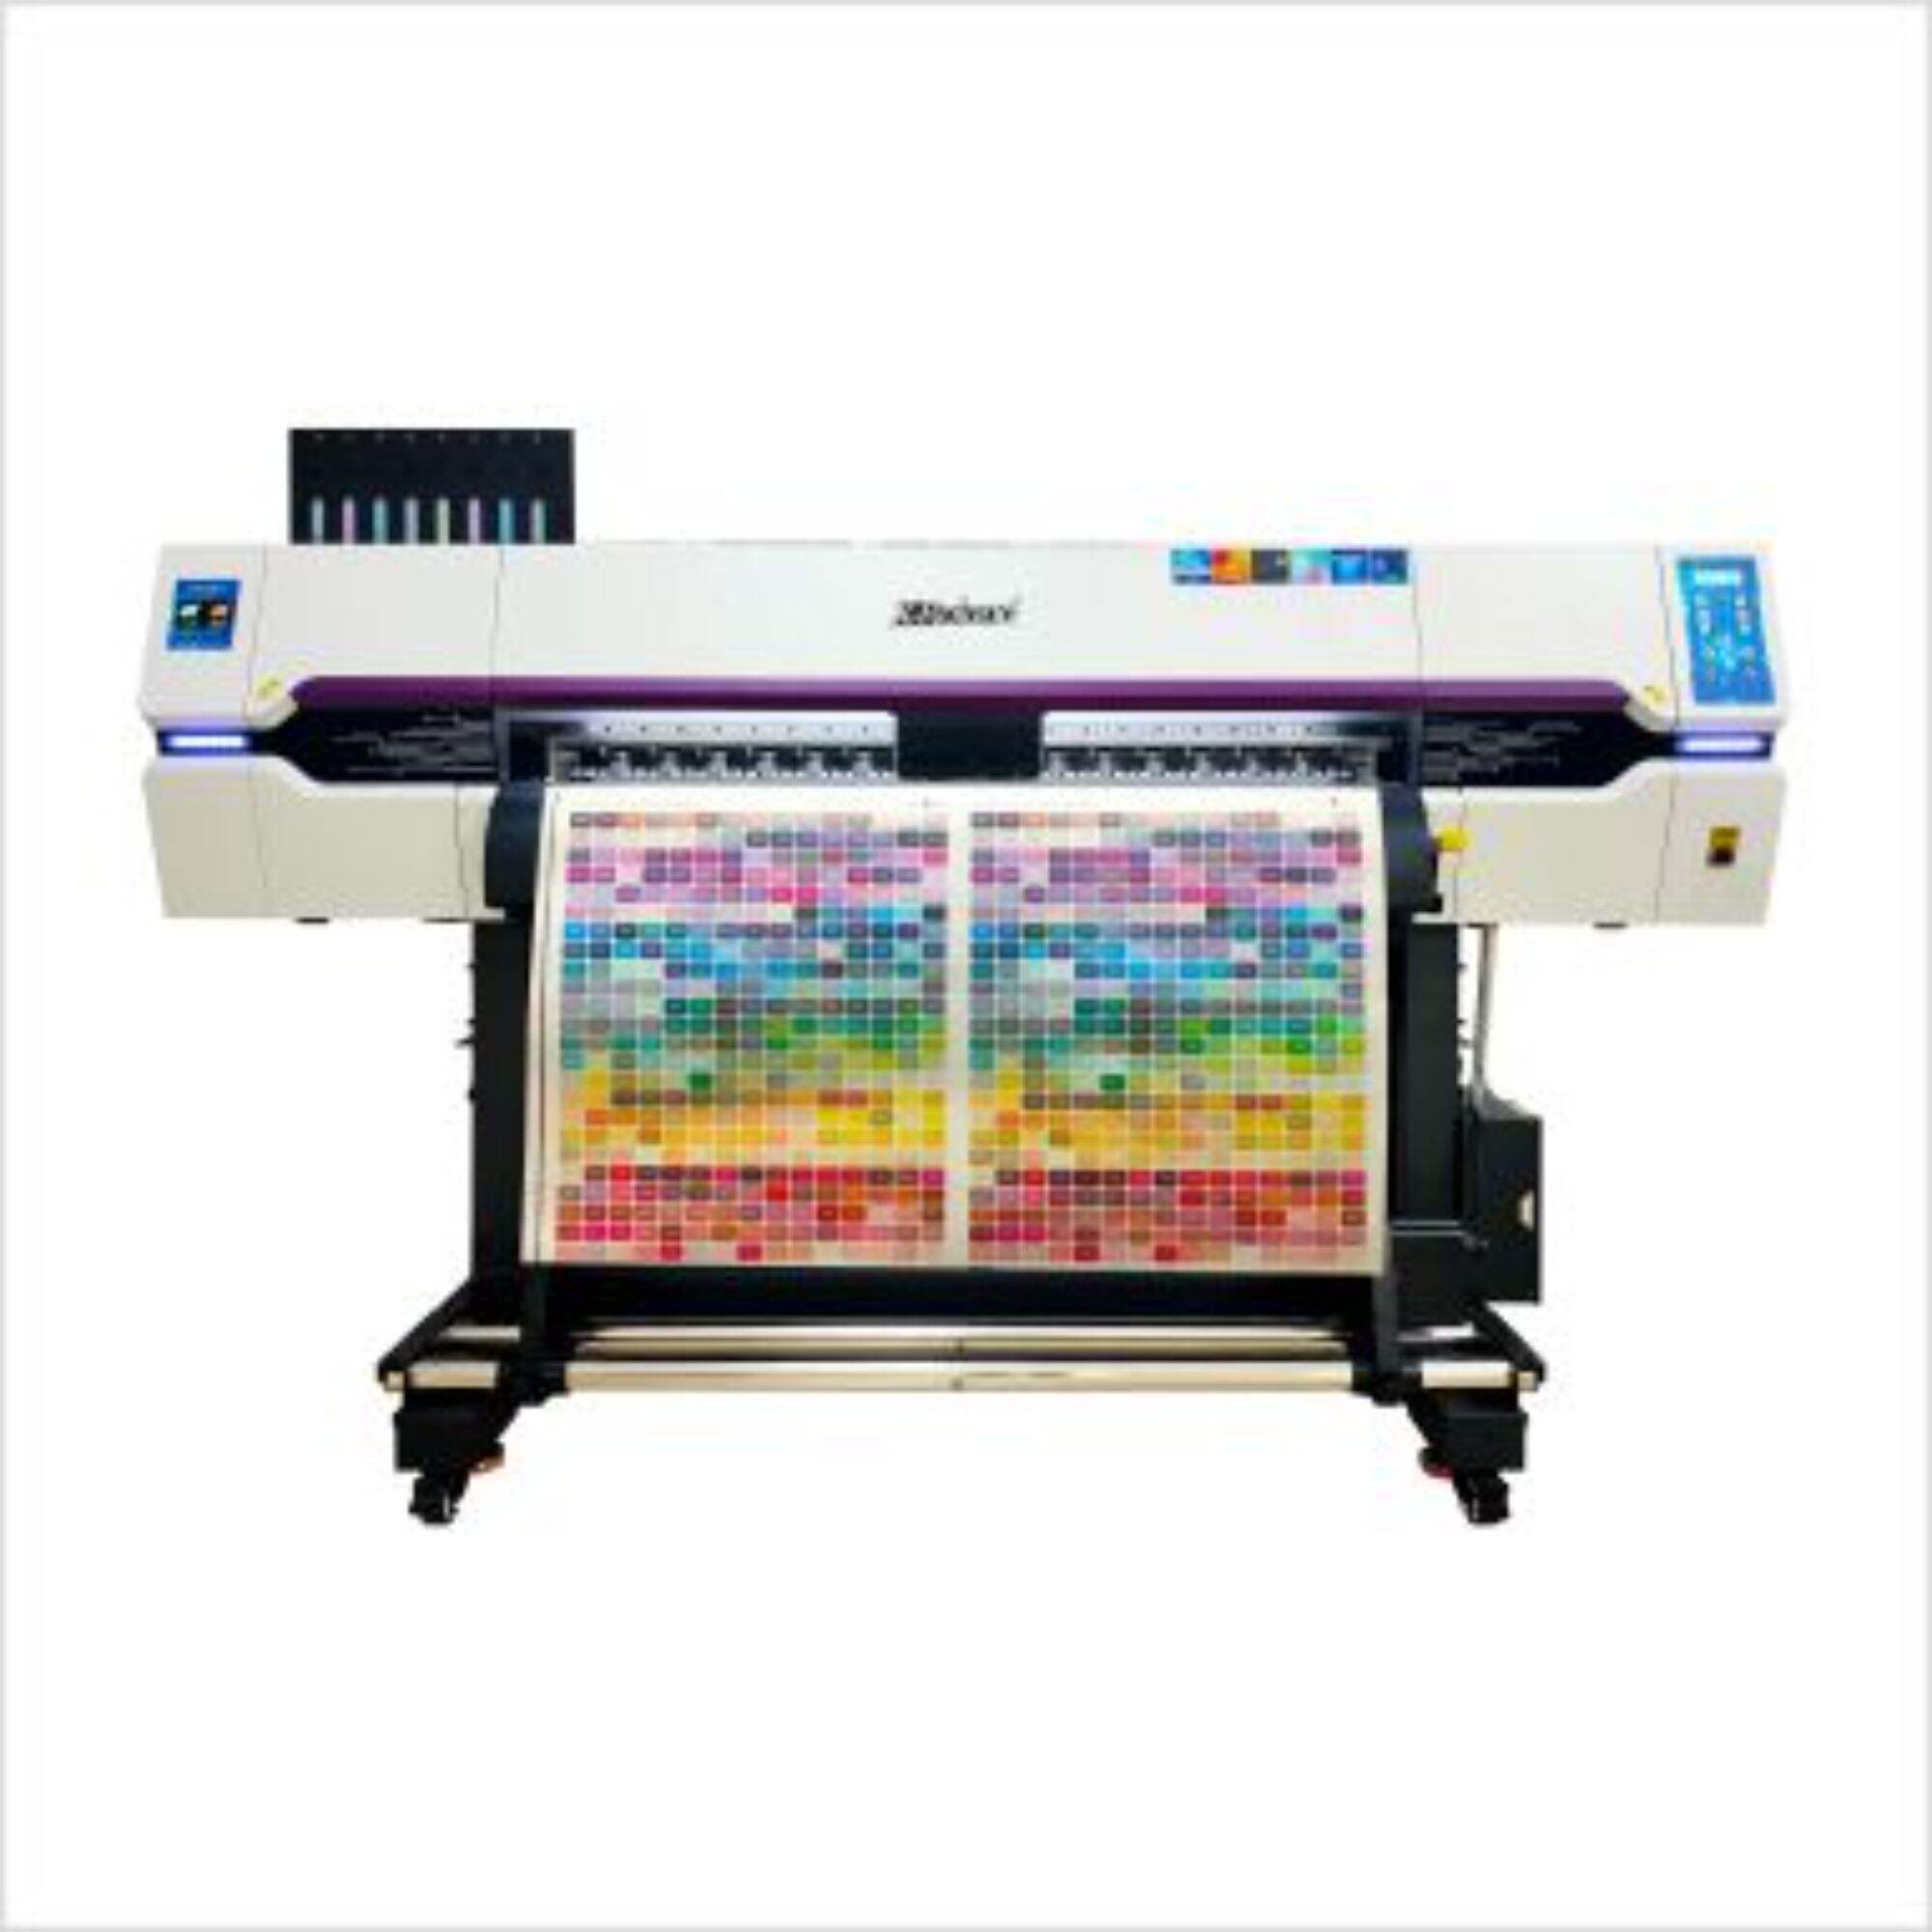 XL-1302F printing proofing printer